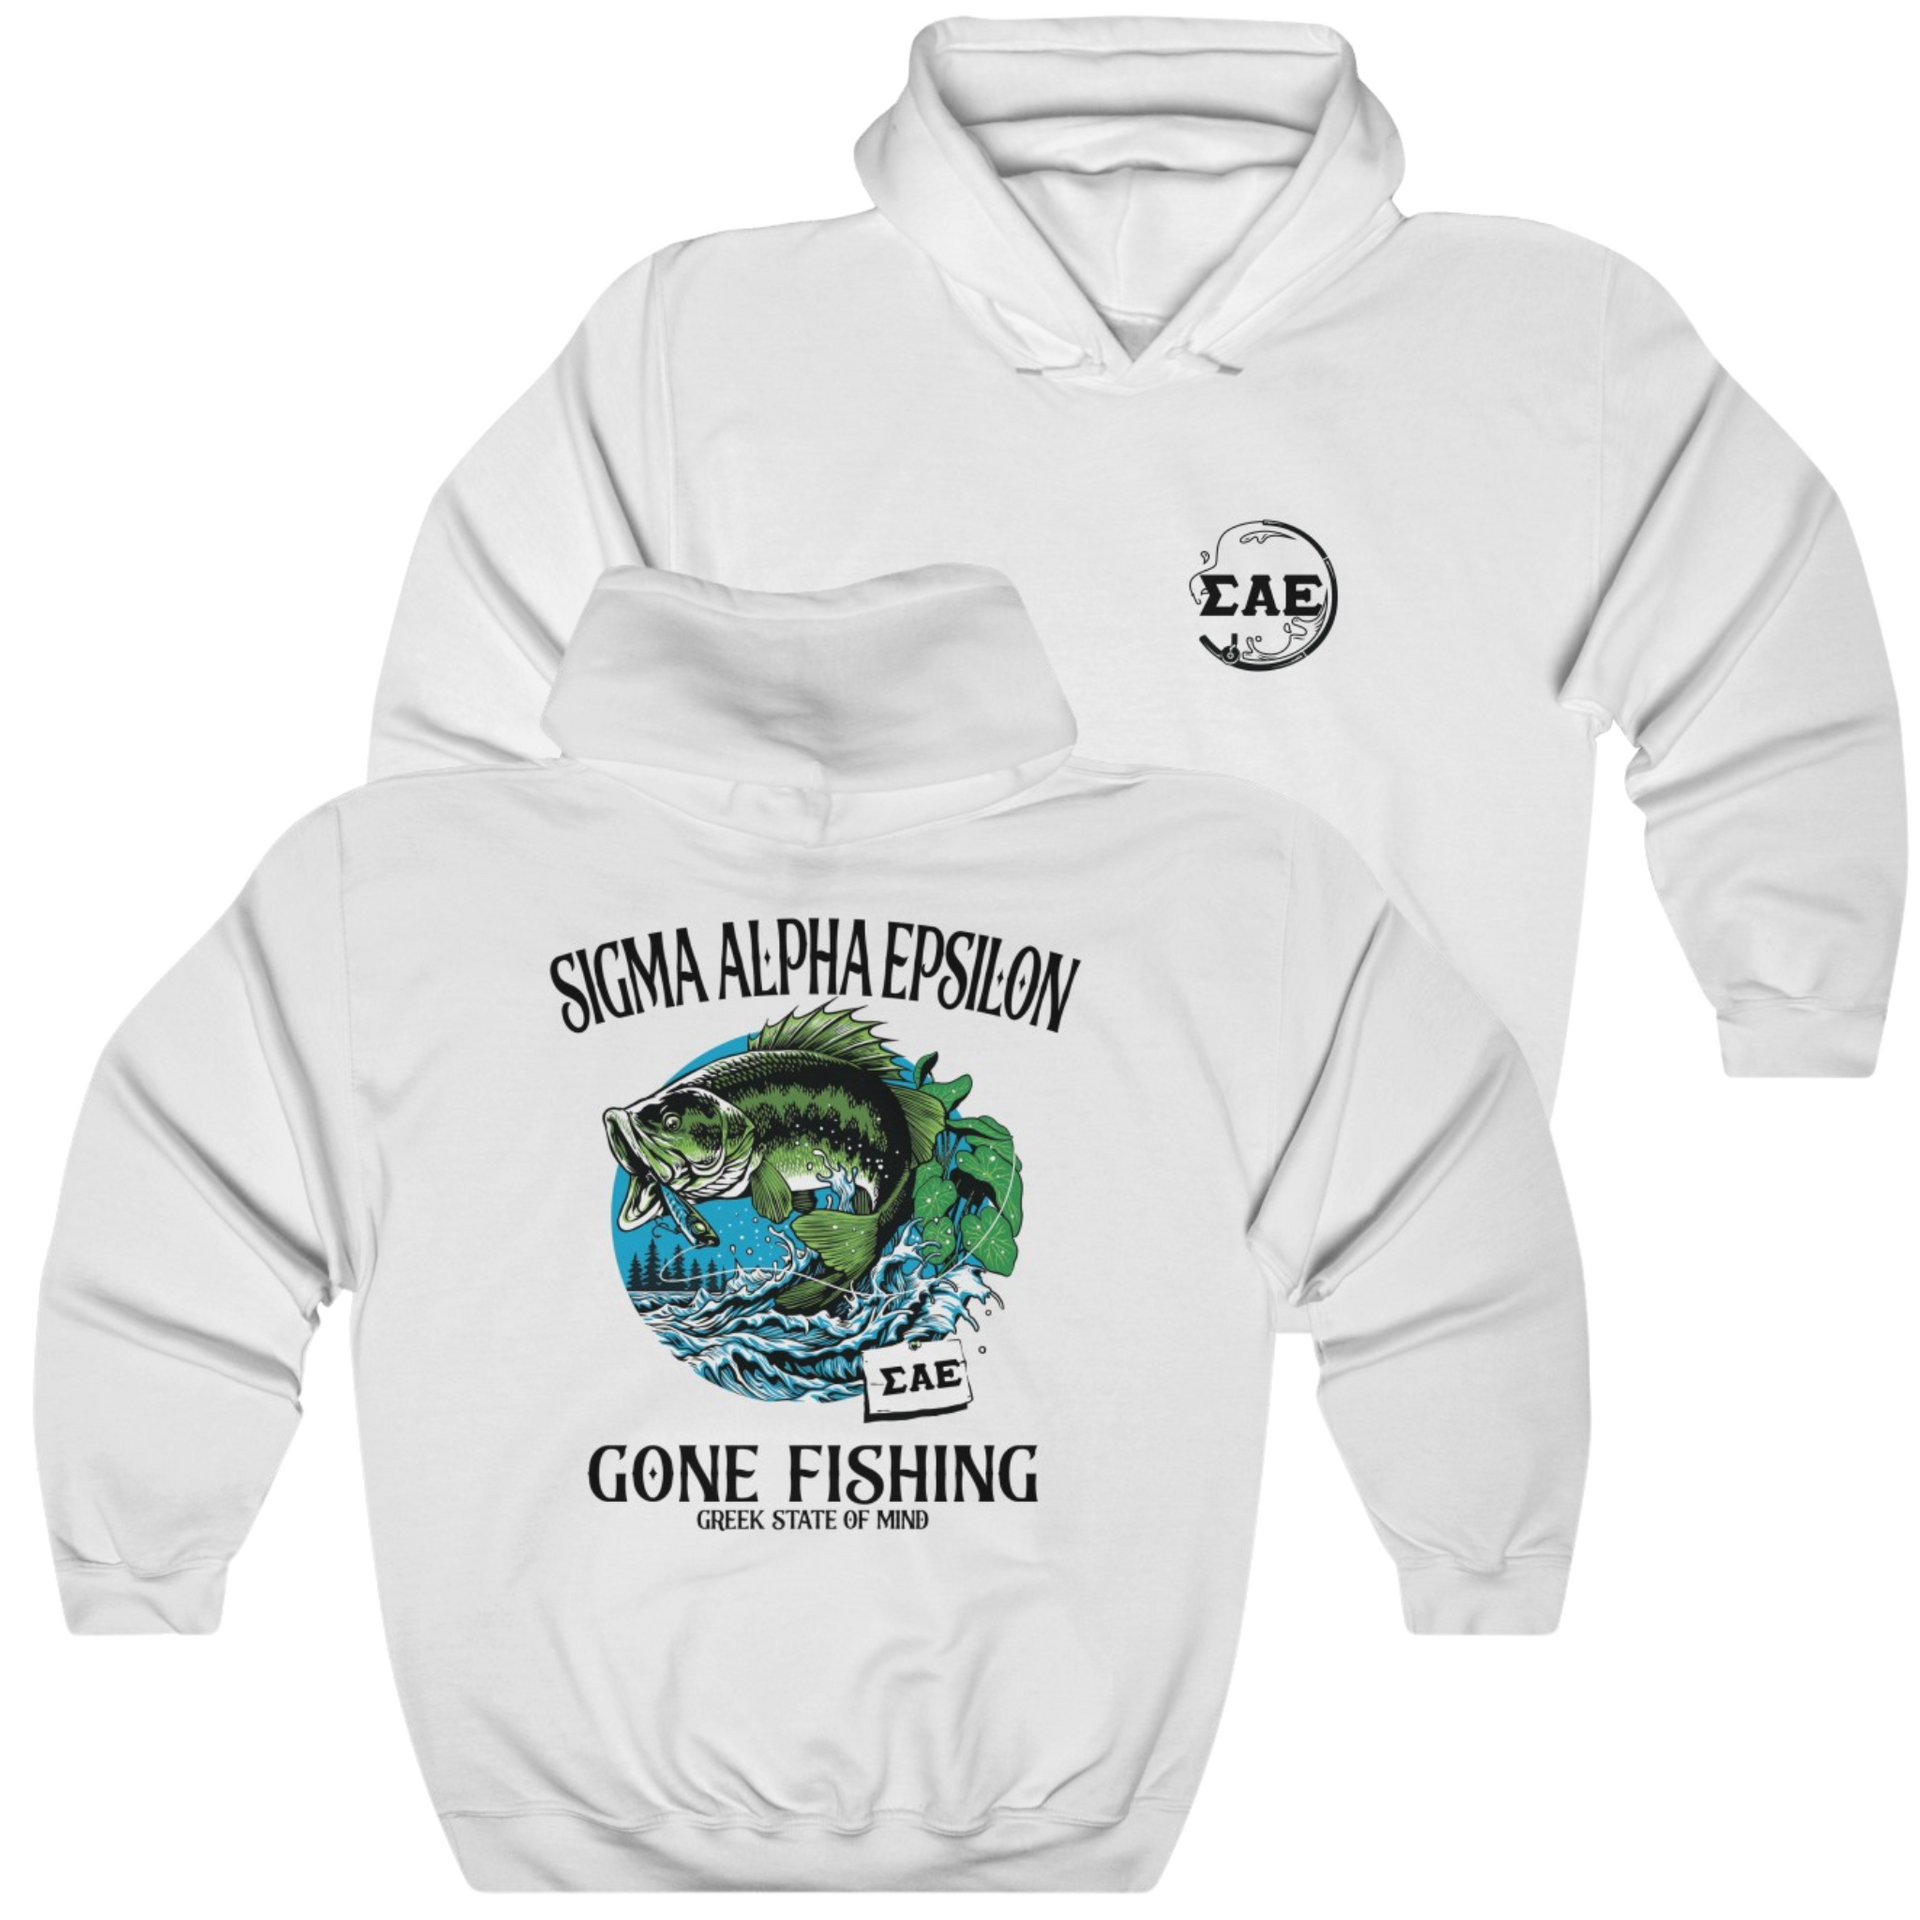 White Sigma Alpha Epsilon Graphic Hoodie | Gone Fishing | Sigma Alpha Epsilon Clothing and Merchandise